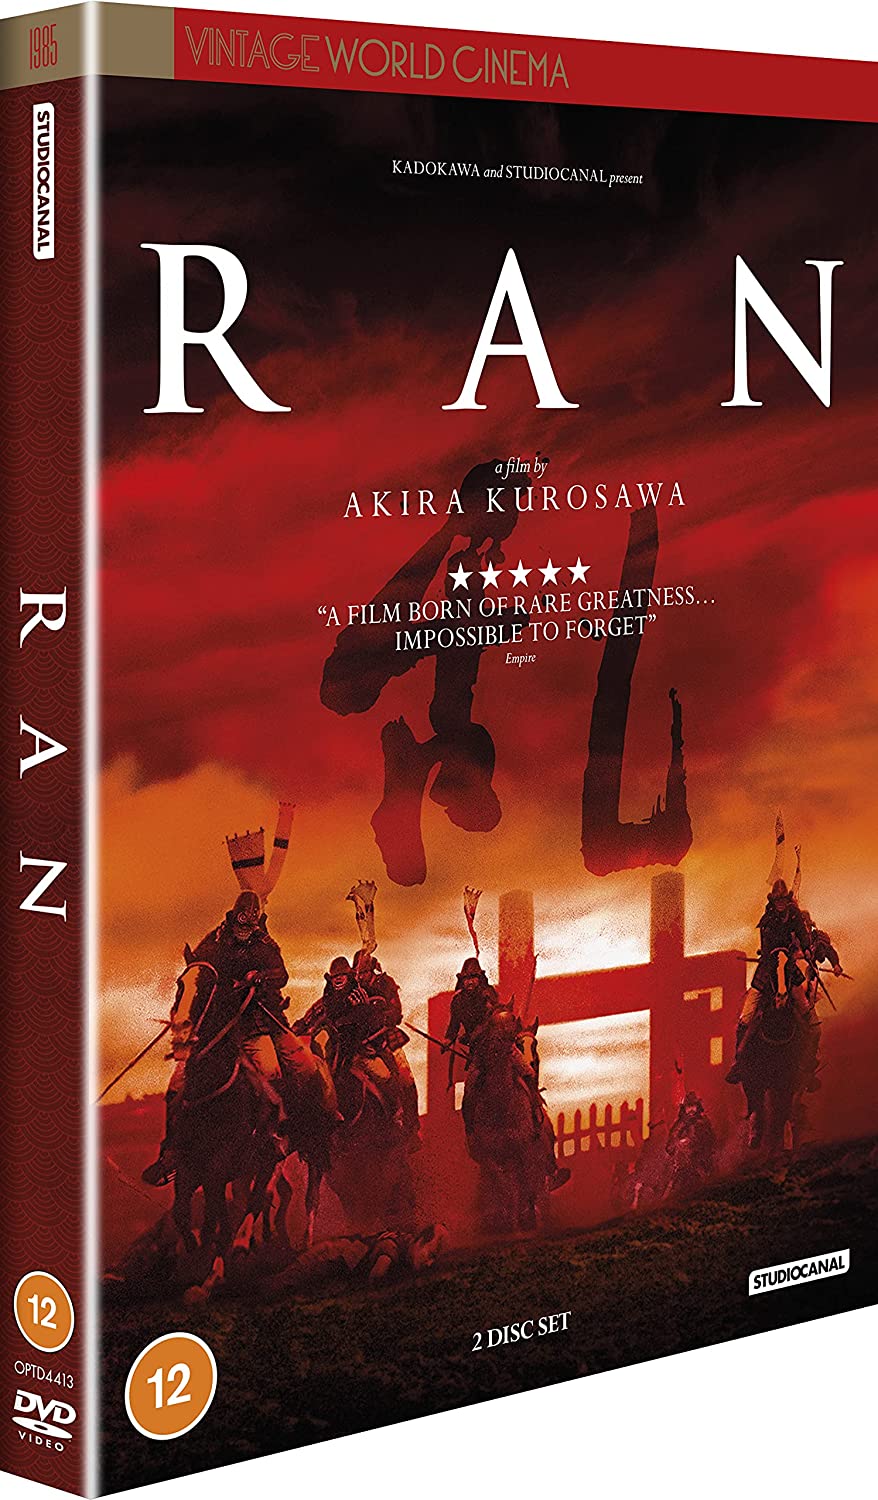 RAN (Vintage World Cinema) [DVD]